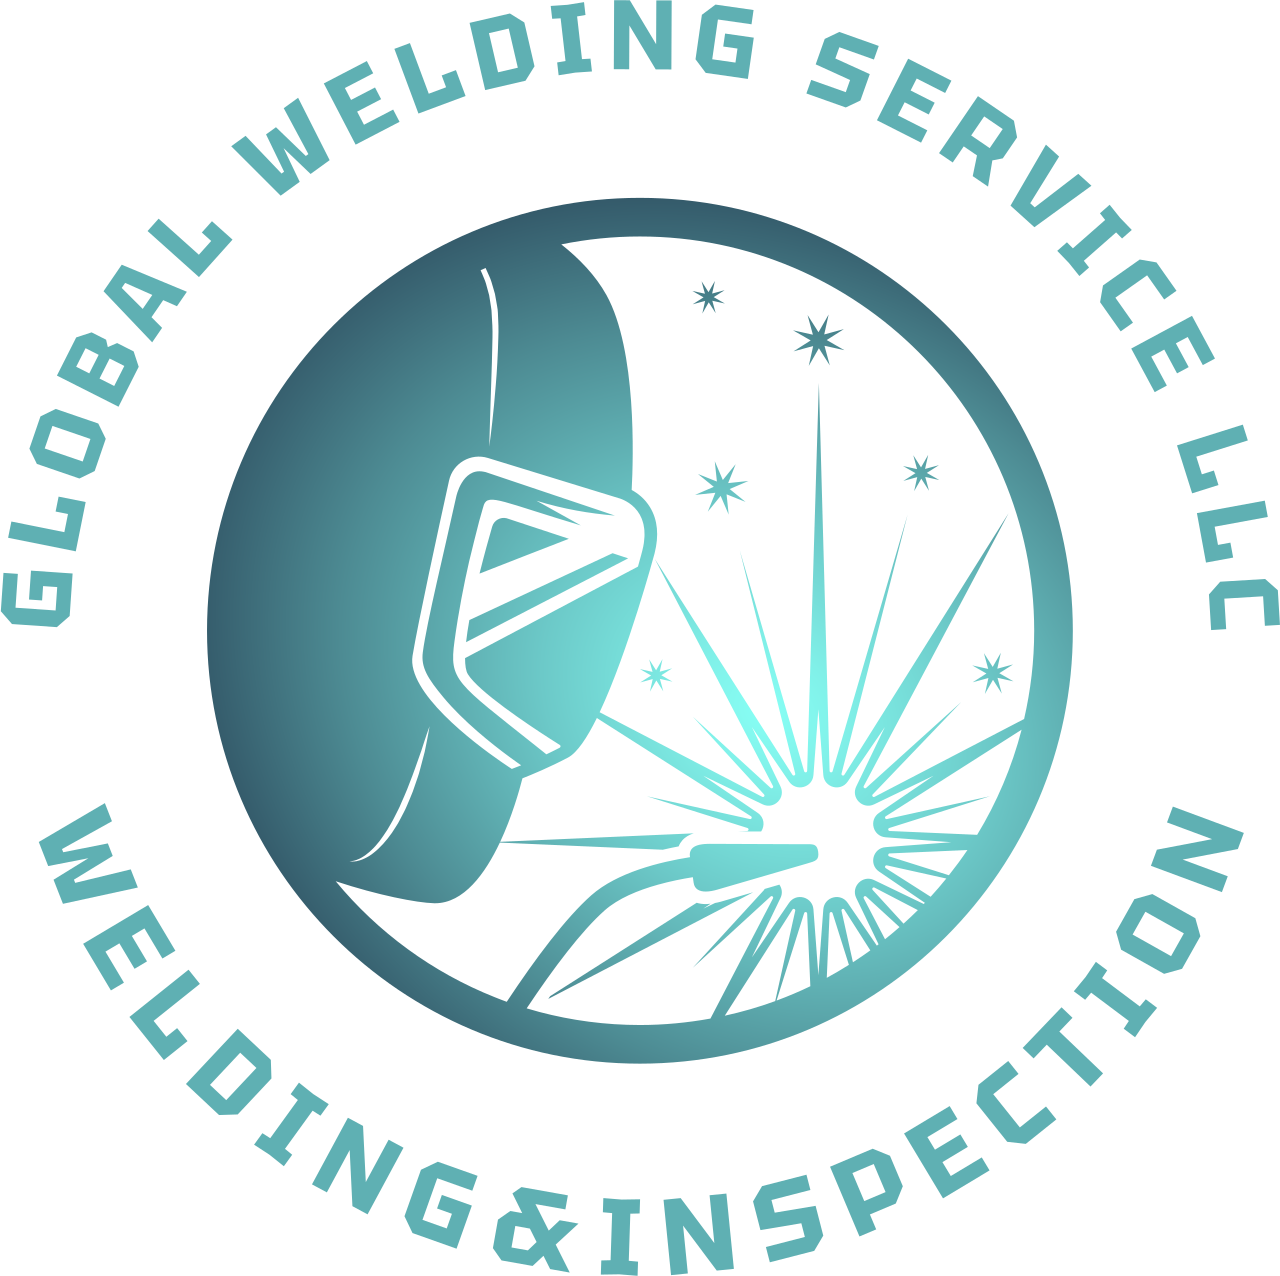 GLOBAL WELDING SERVICE LLC's logo